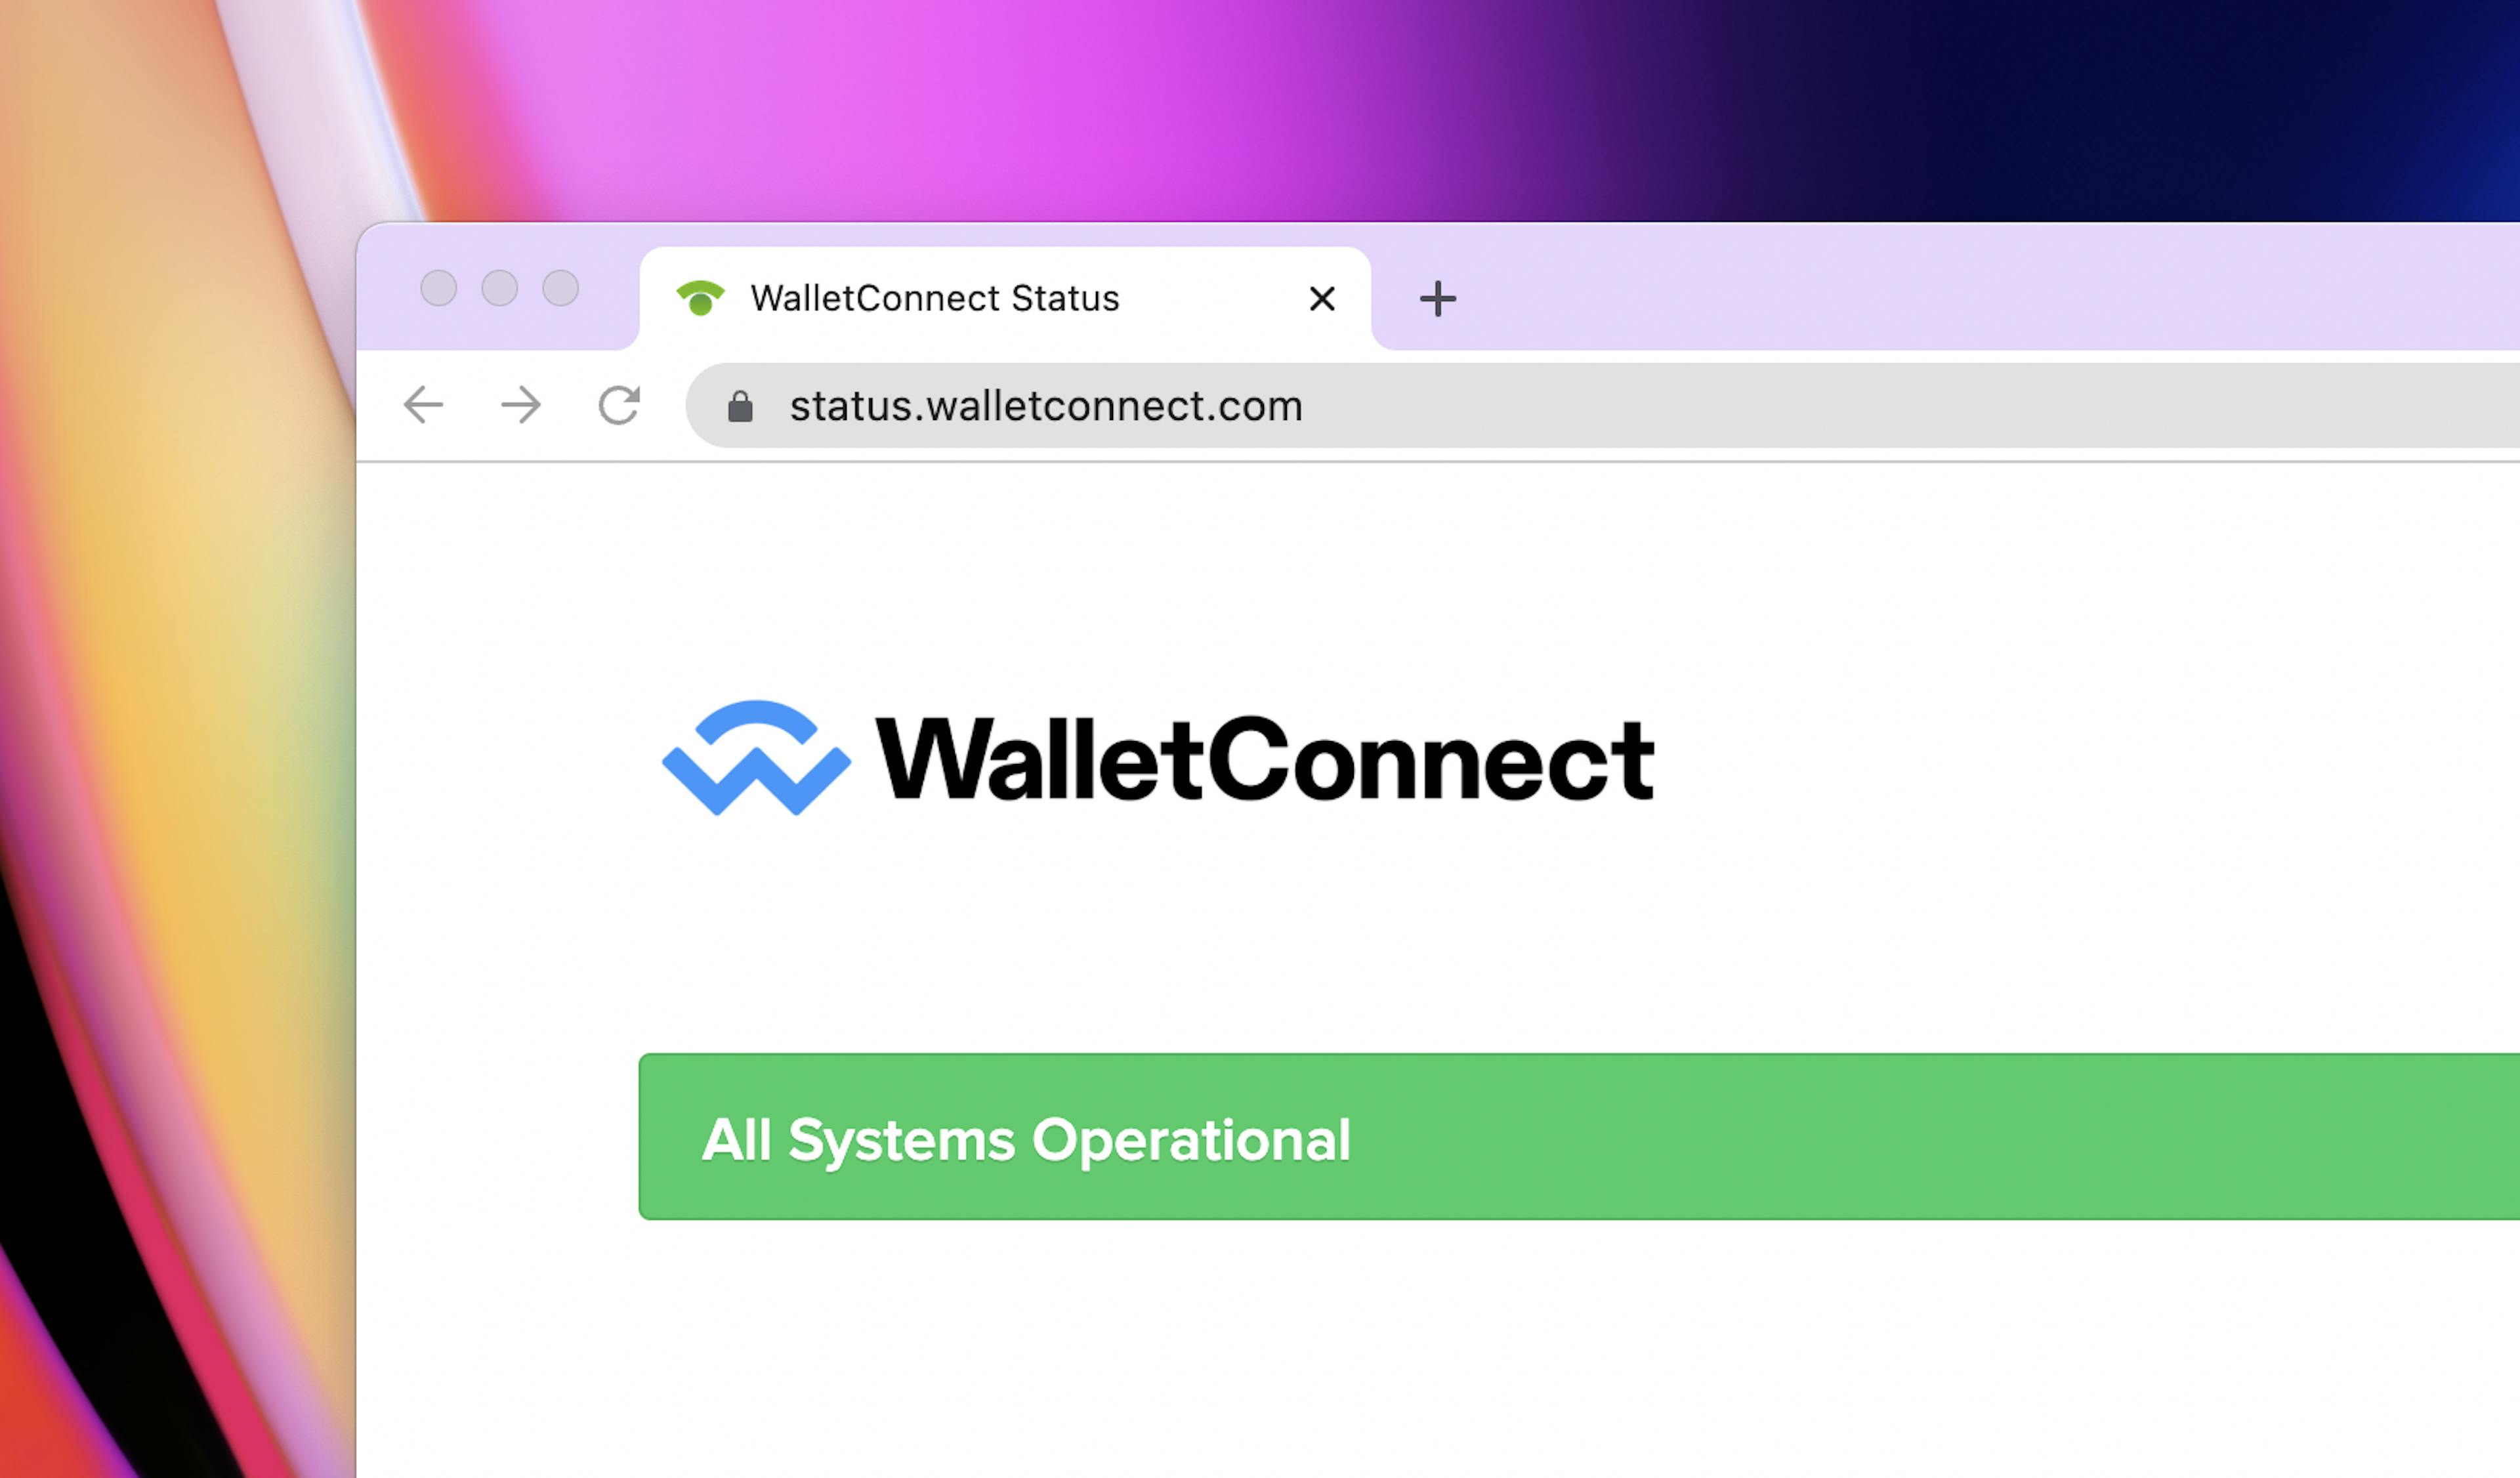 The WalletConnect Status website